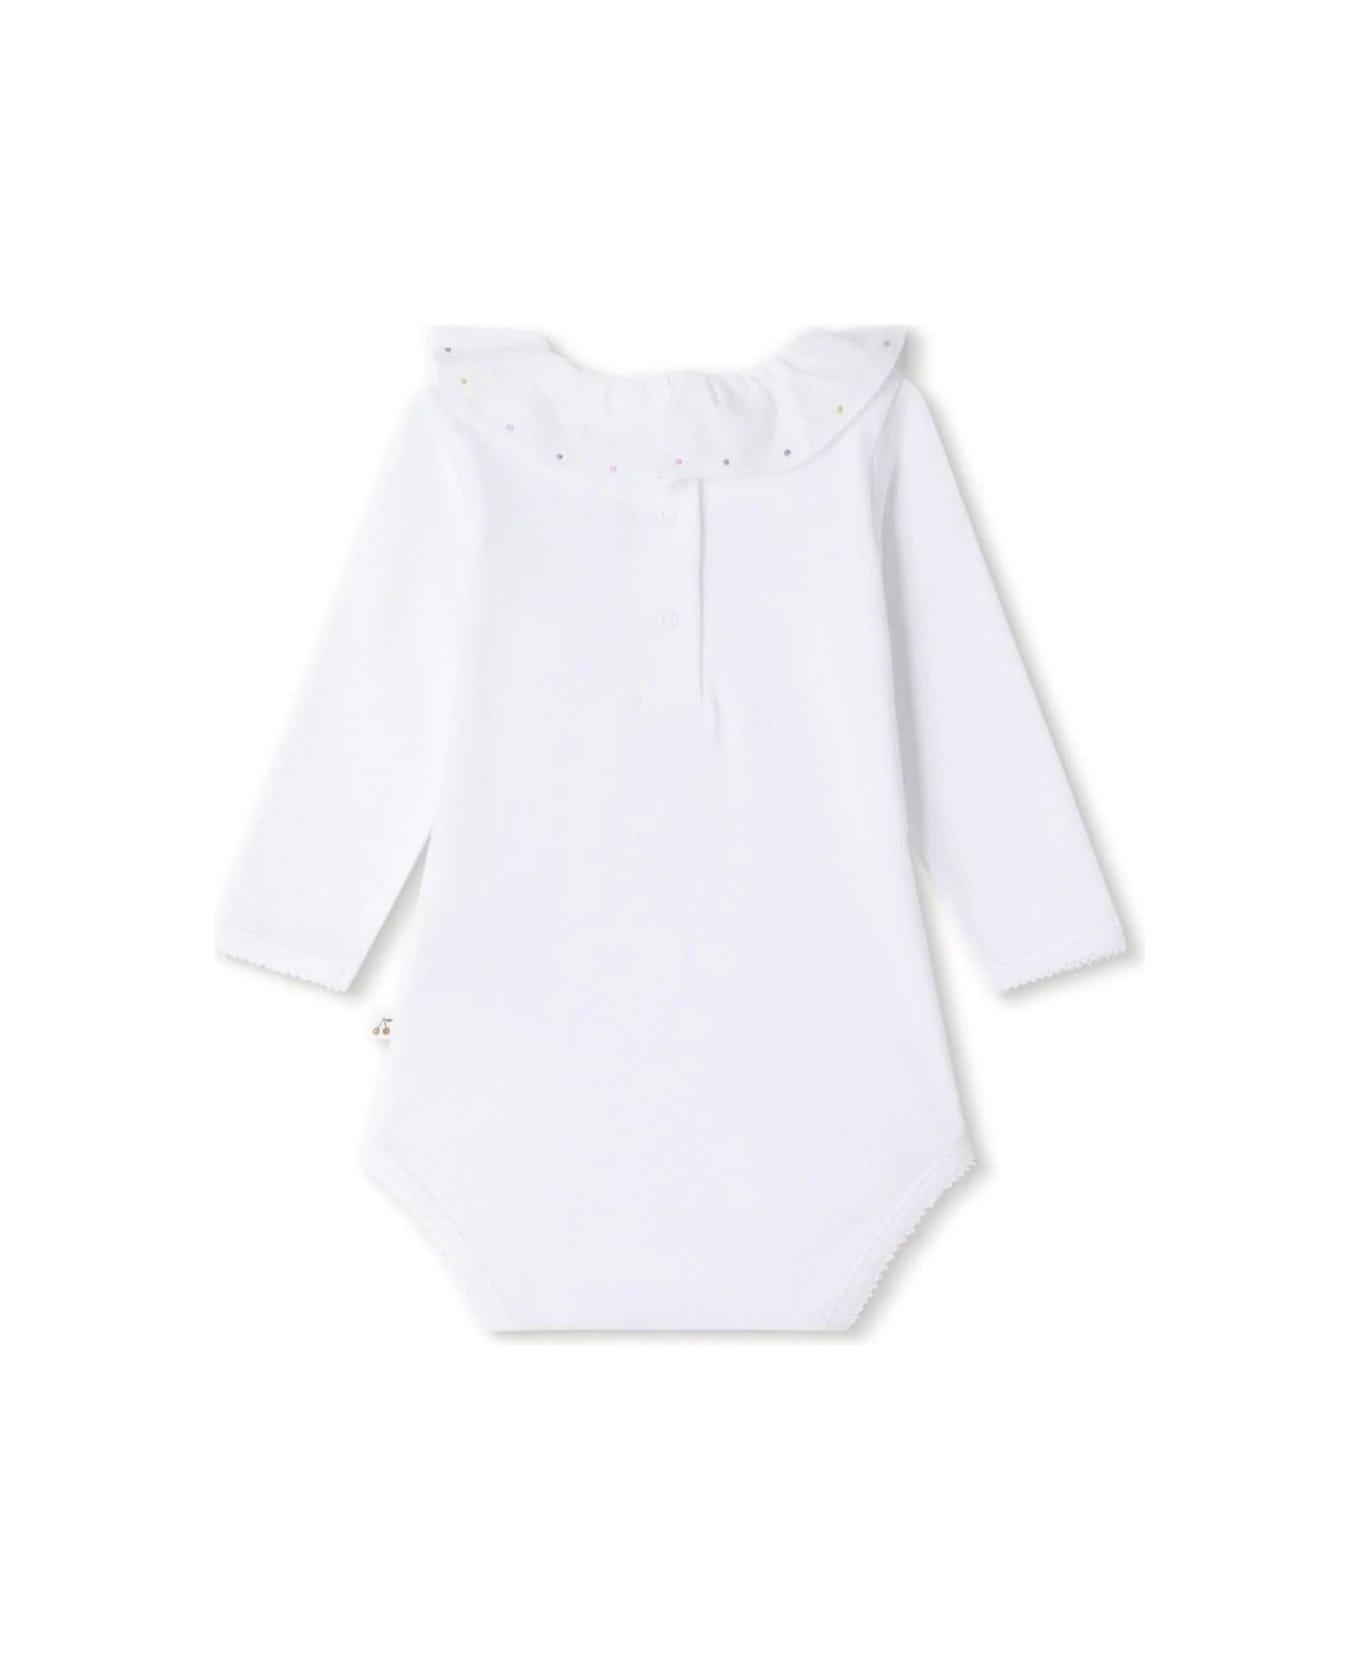 Bonpoint April Bodysuit In White/multicolor - White